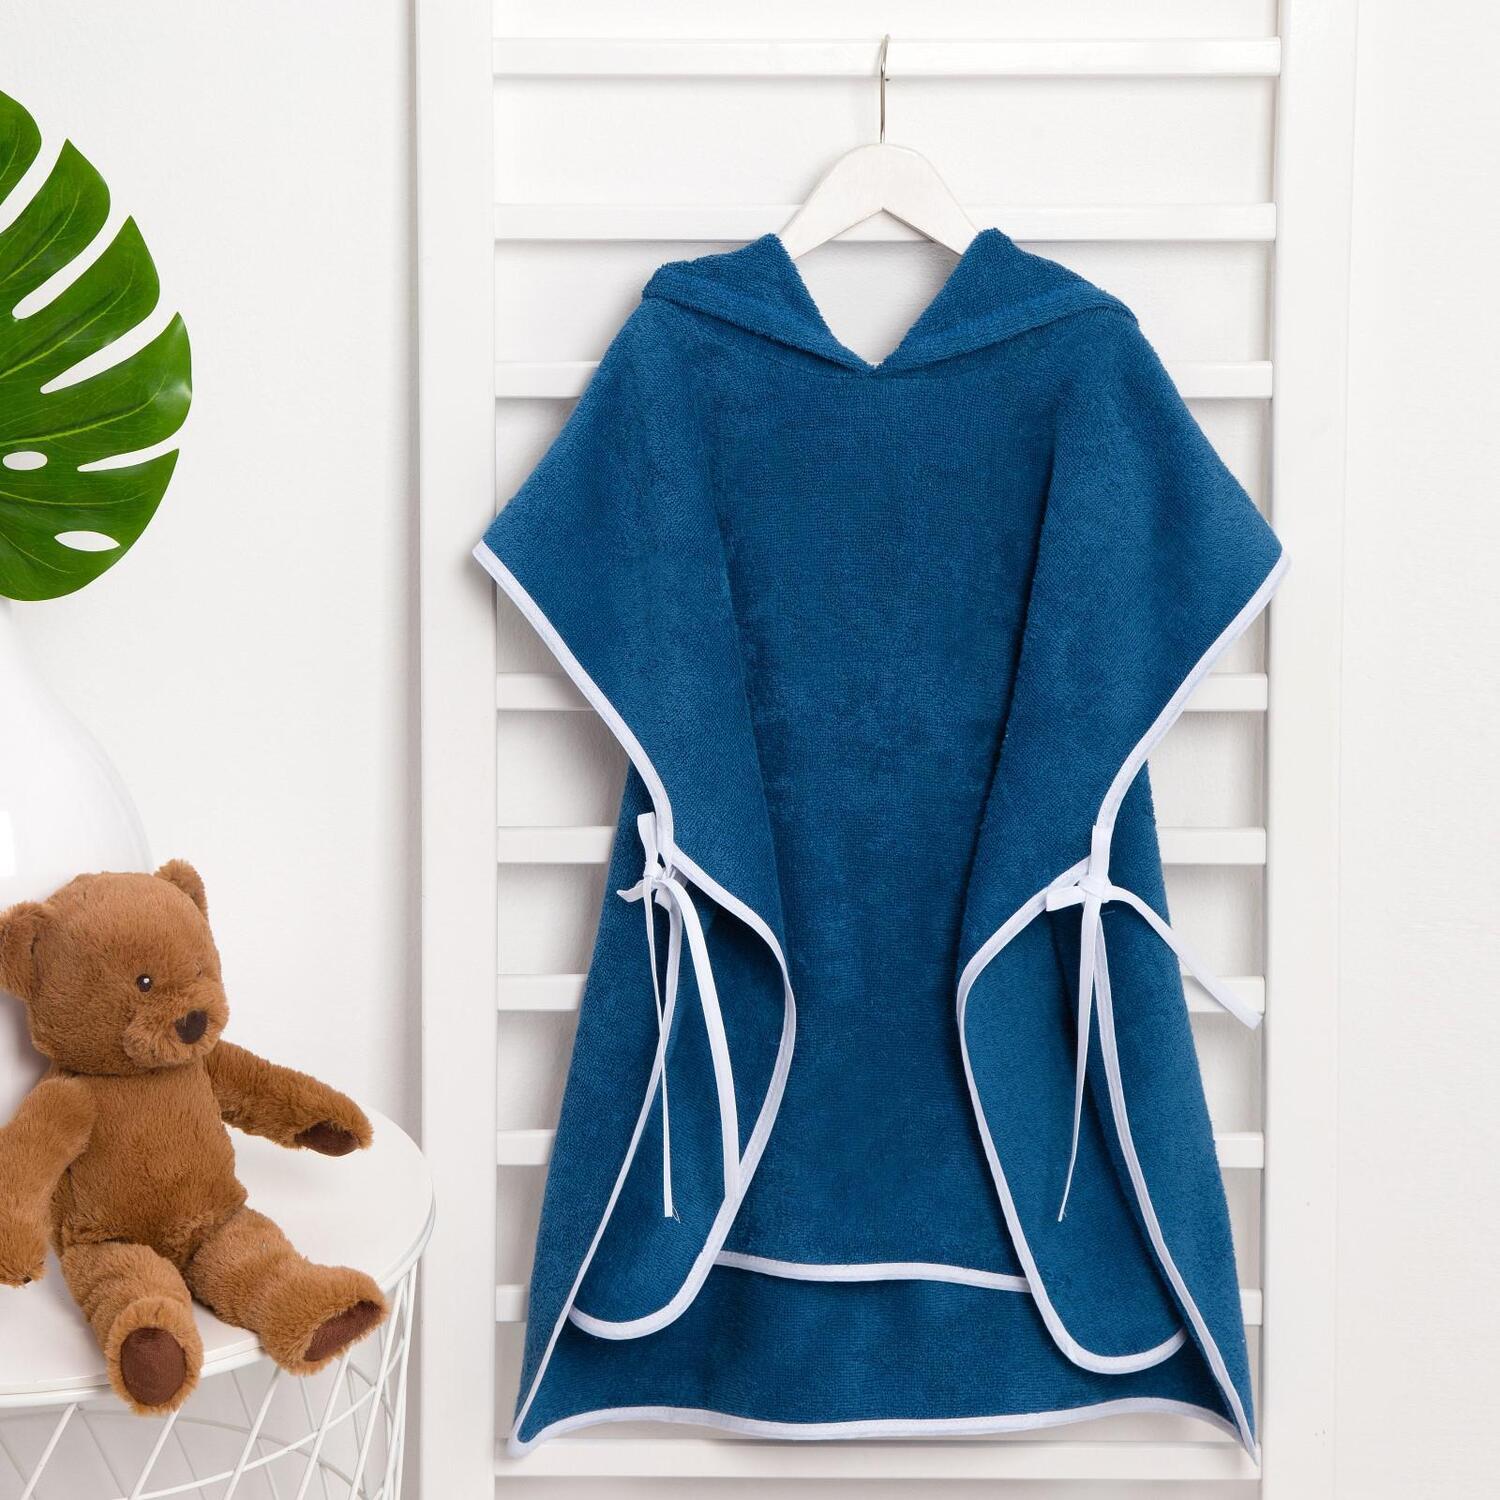 Детское полотенце Гномик цвет: синий (58х64 см), размер 58х64 см